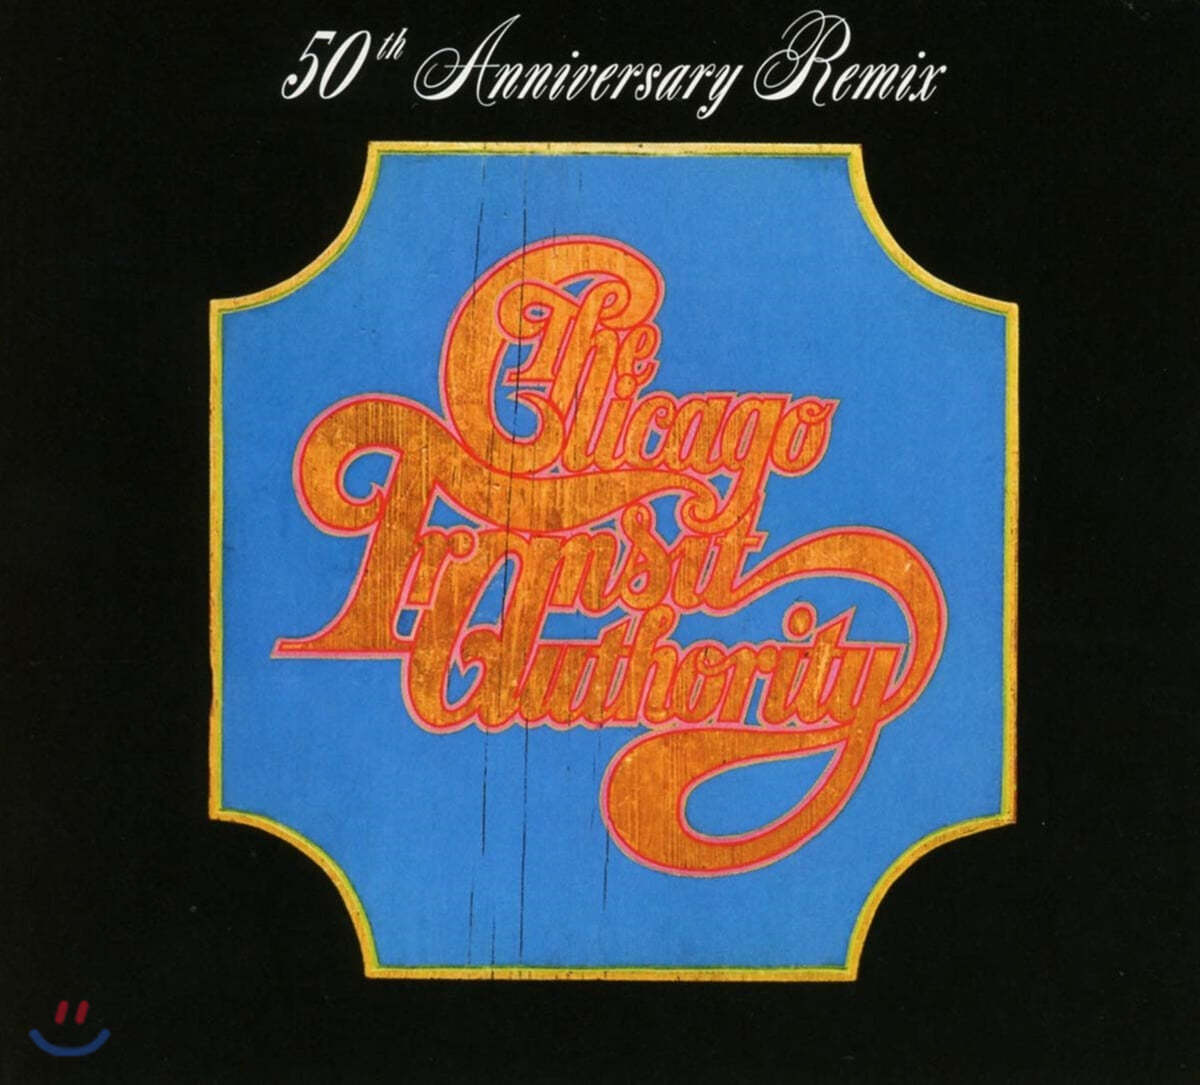 Chicago (시카고) - Chicago Transit Authority (50th Anniversary Remix)